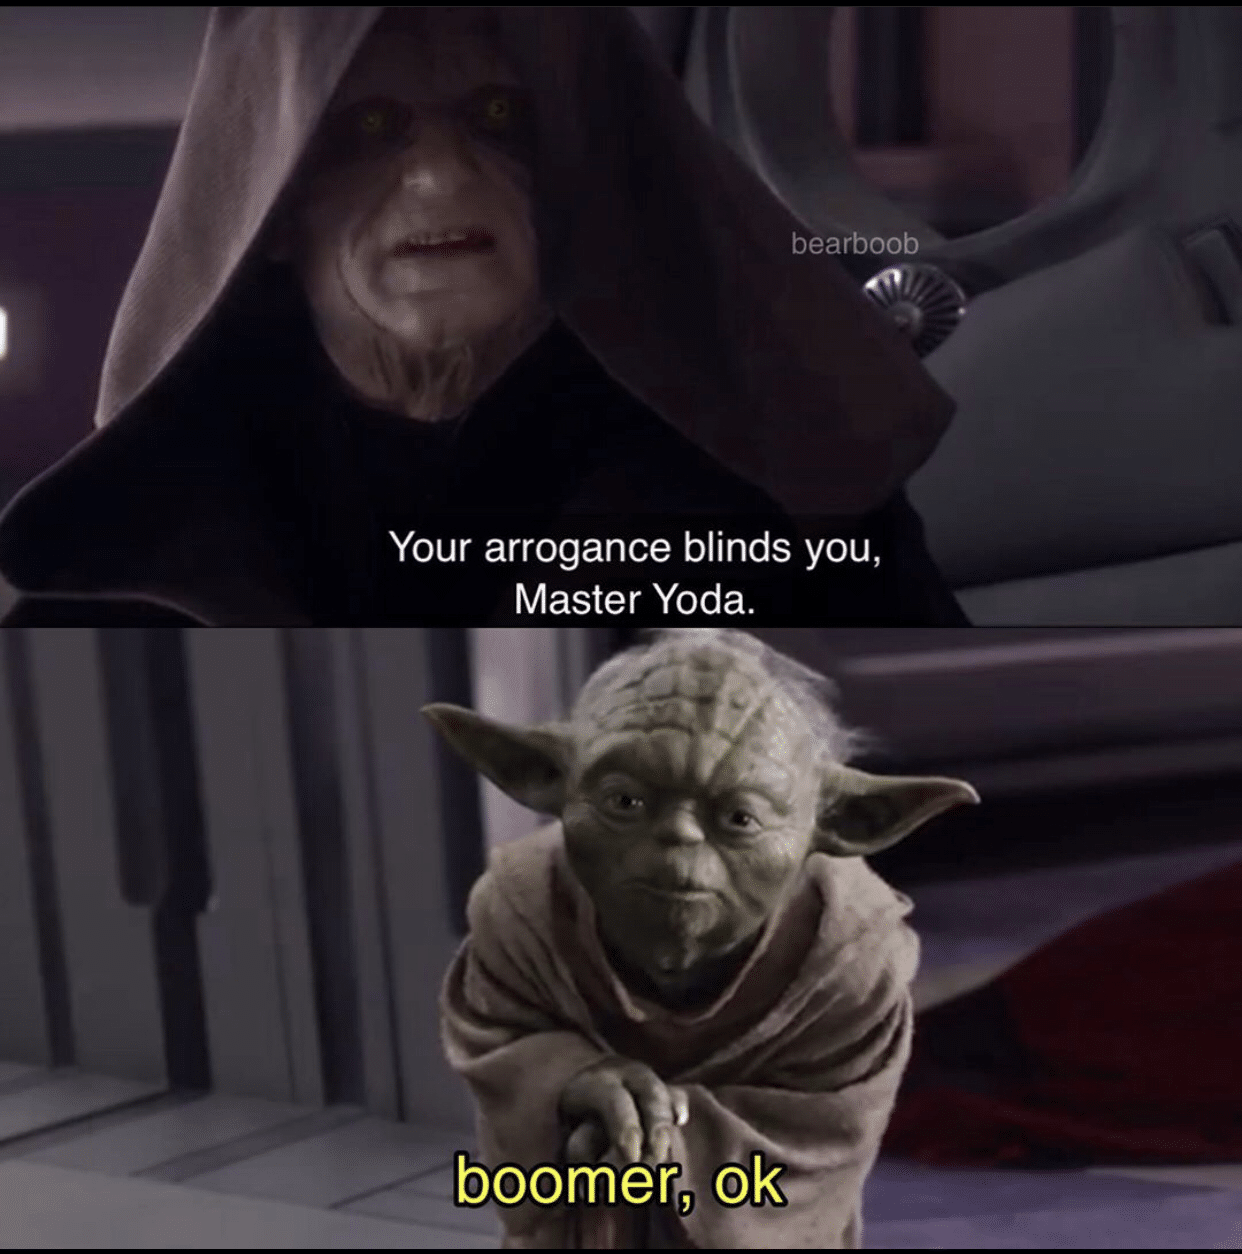 prequel-memes star-wars-memes prequel-memes text: bearboob Your arrogance blinds you, Master Yoda. boomer, dk.. 